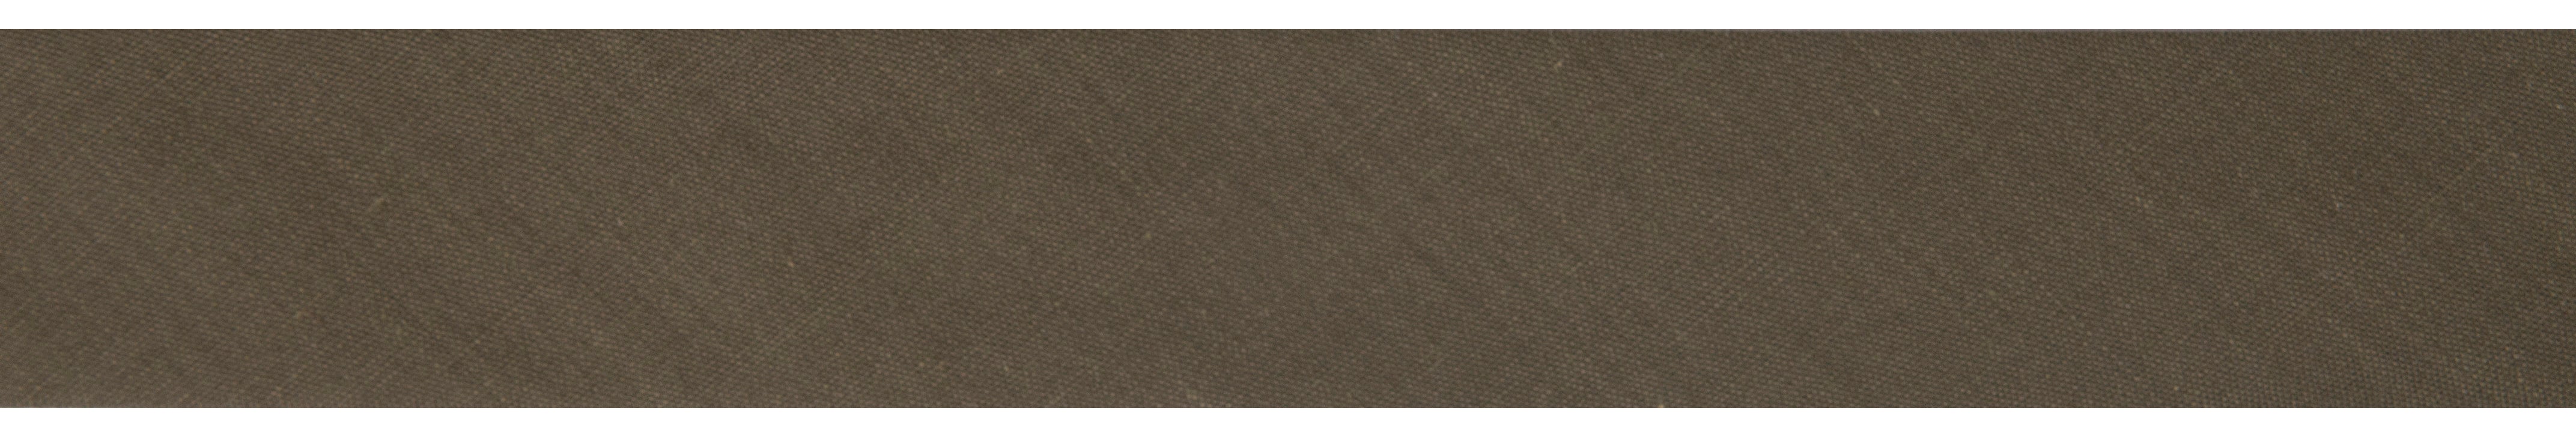 20m roll of Dark Khaki Bias Binding | 25mm width from Jaycotts Sewing Supplies